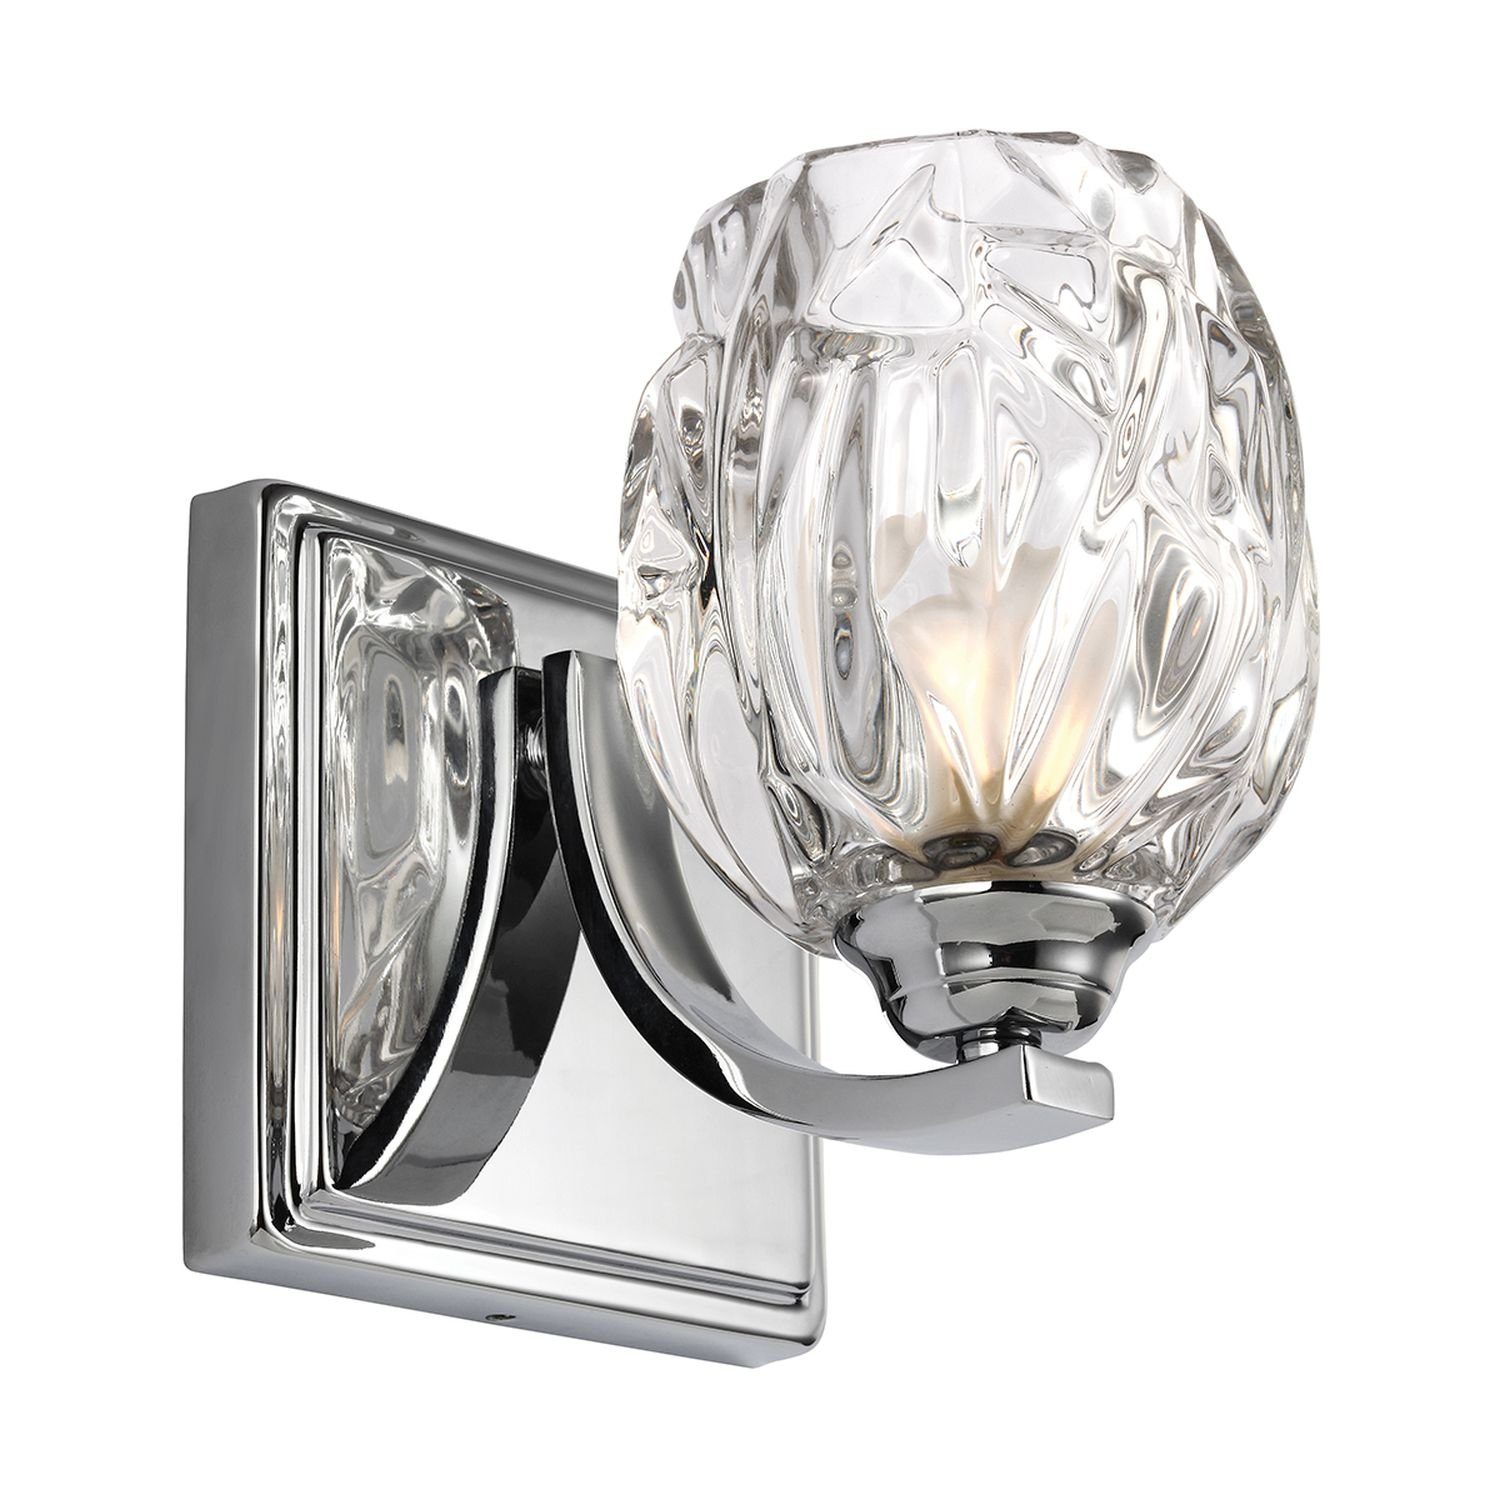 Metall K BOGAR, 3000 Licht-Erlebnisse Beleuchtung G9 320 Wandlampe wechselbar, Wandleuchte IP44 LED Modern lm Warmweiß, Glas